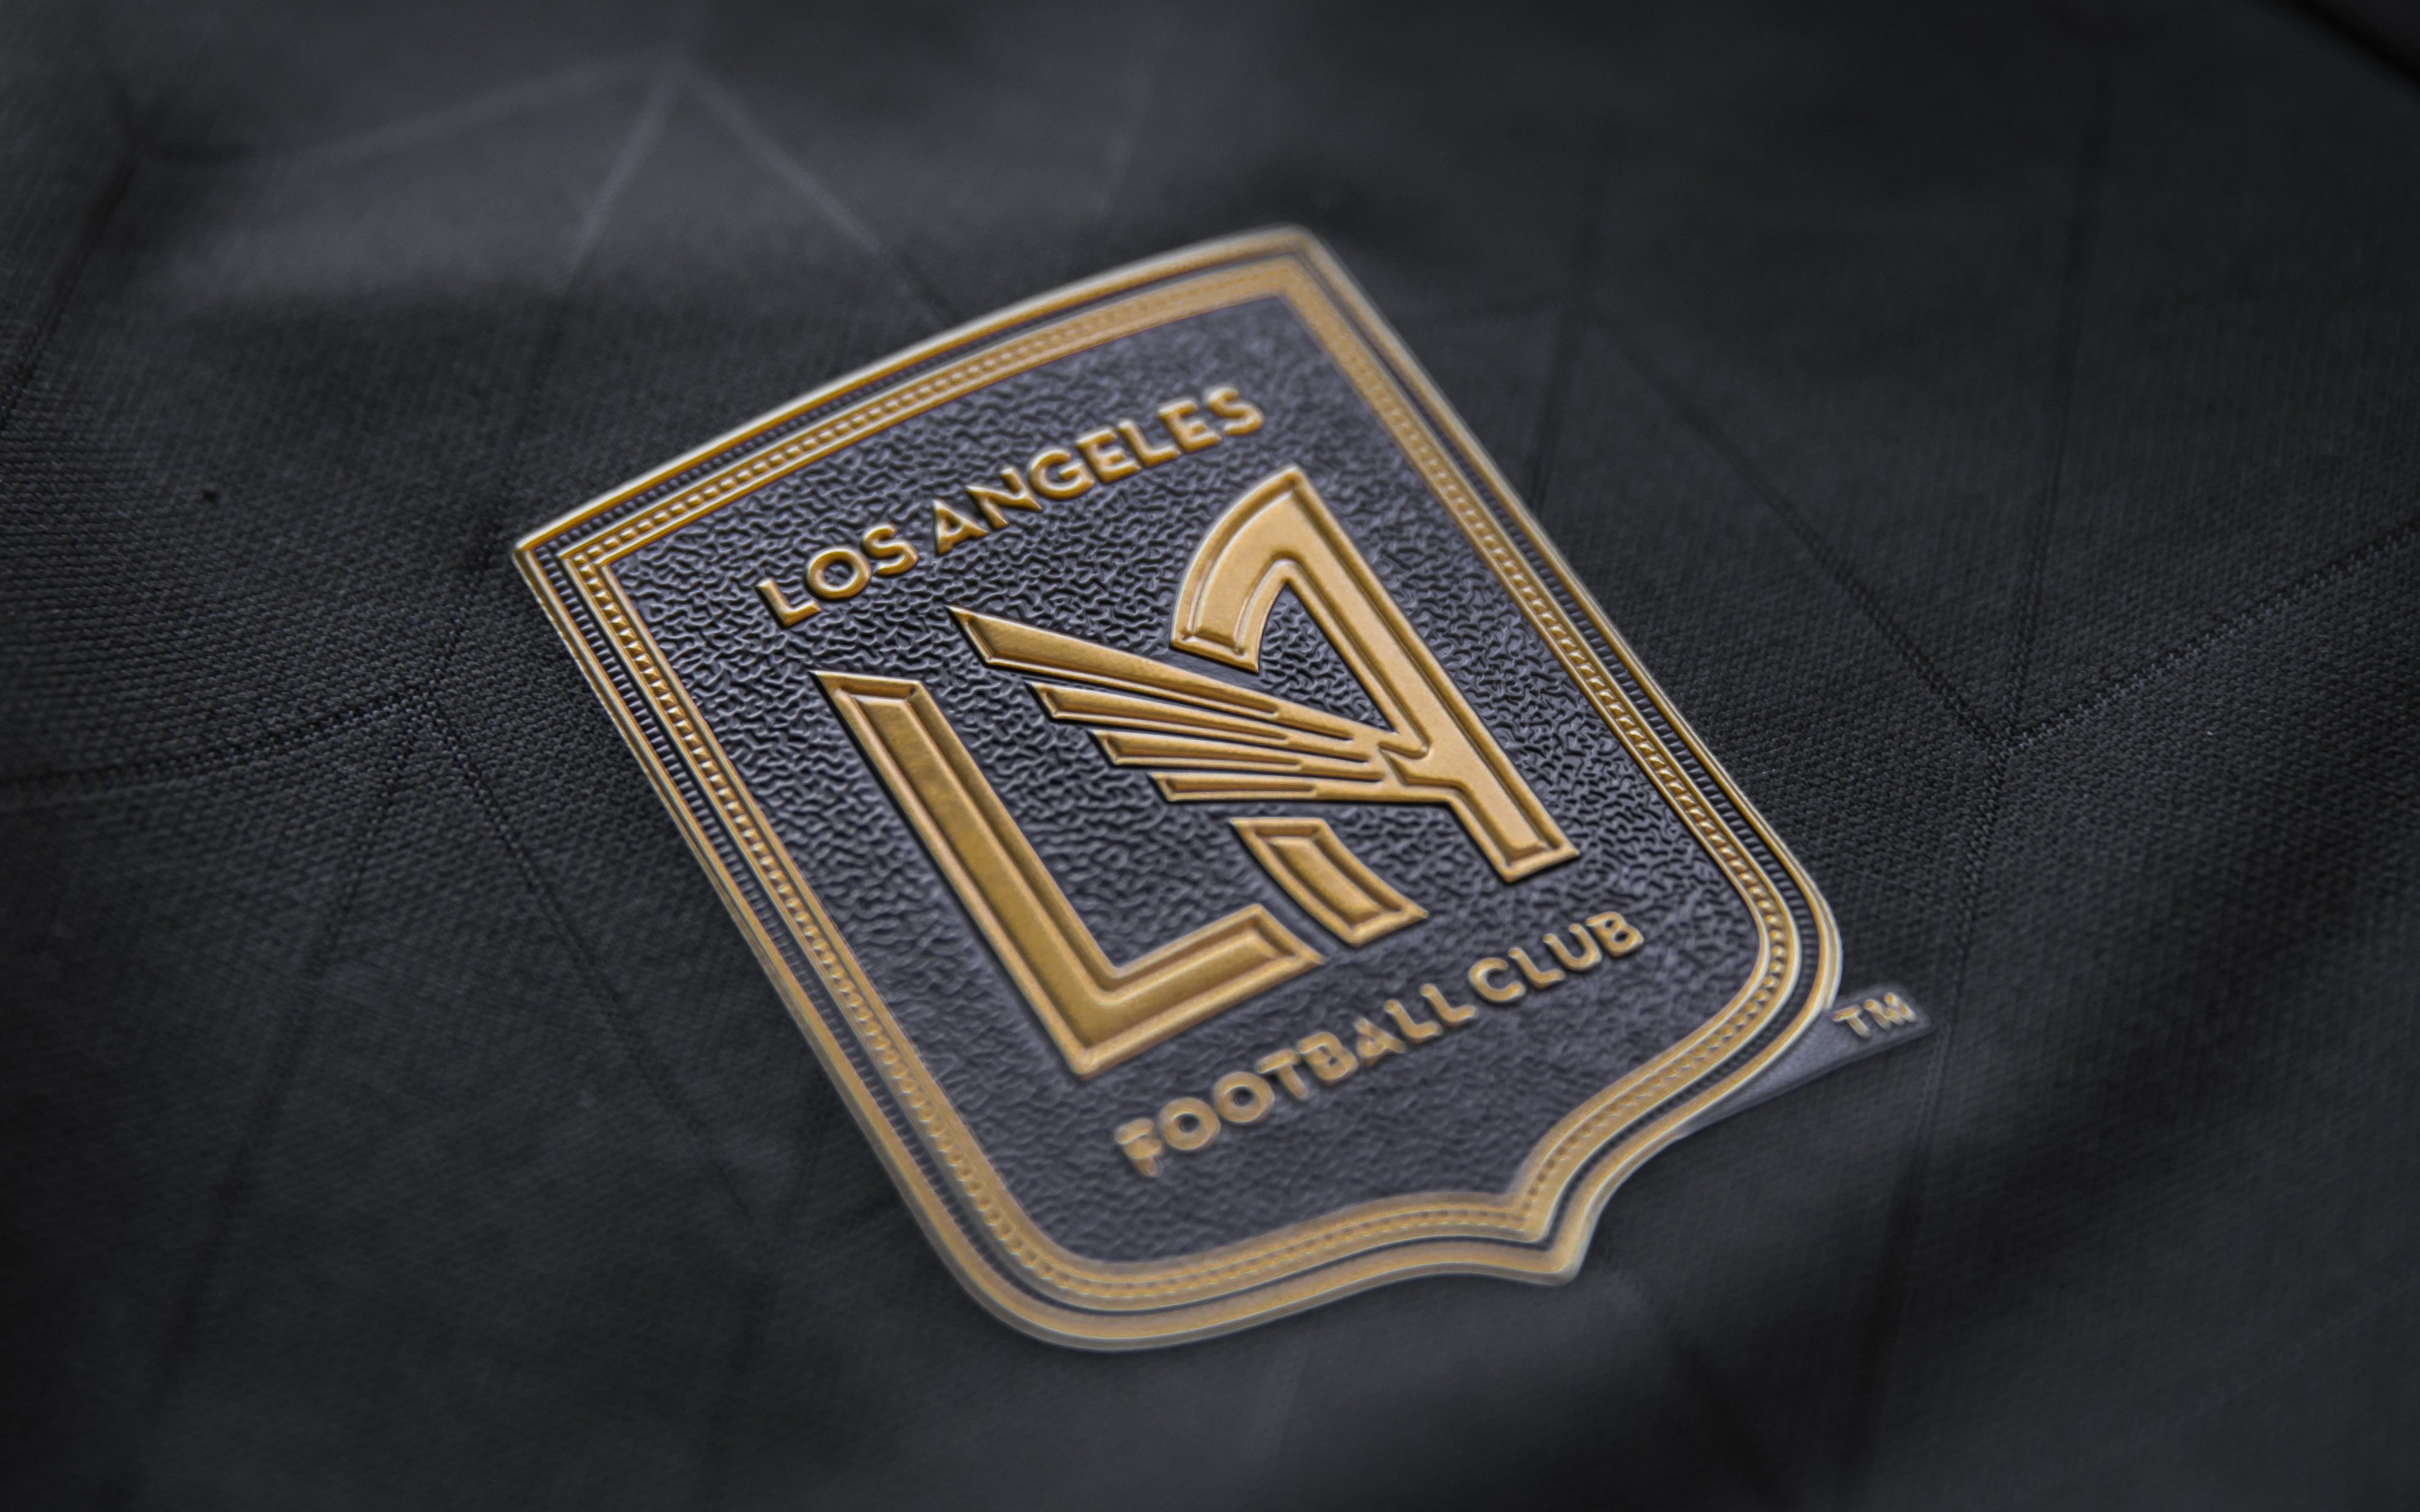 Los Angeles Football Club Logo 4k Ultra HD Wallpaper. Background